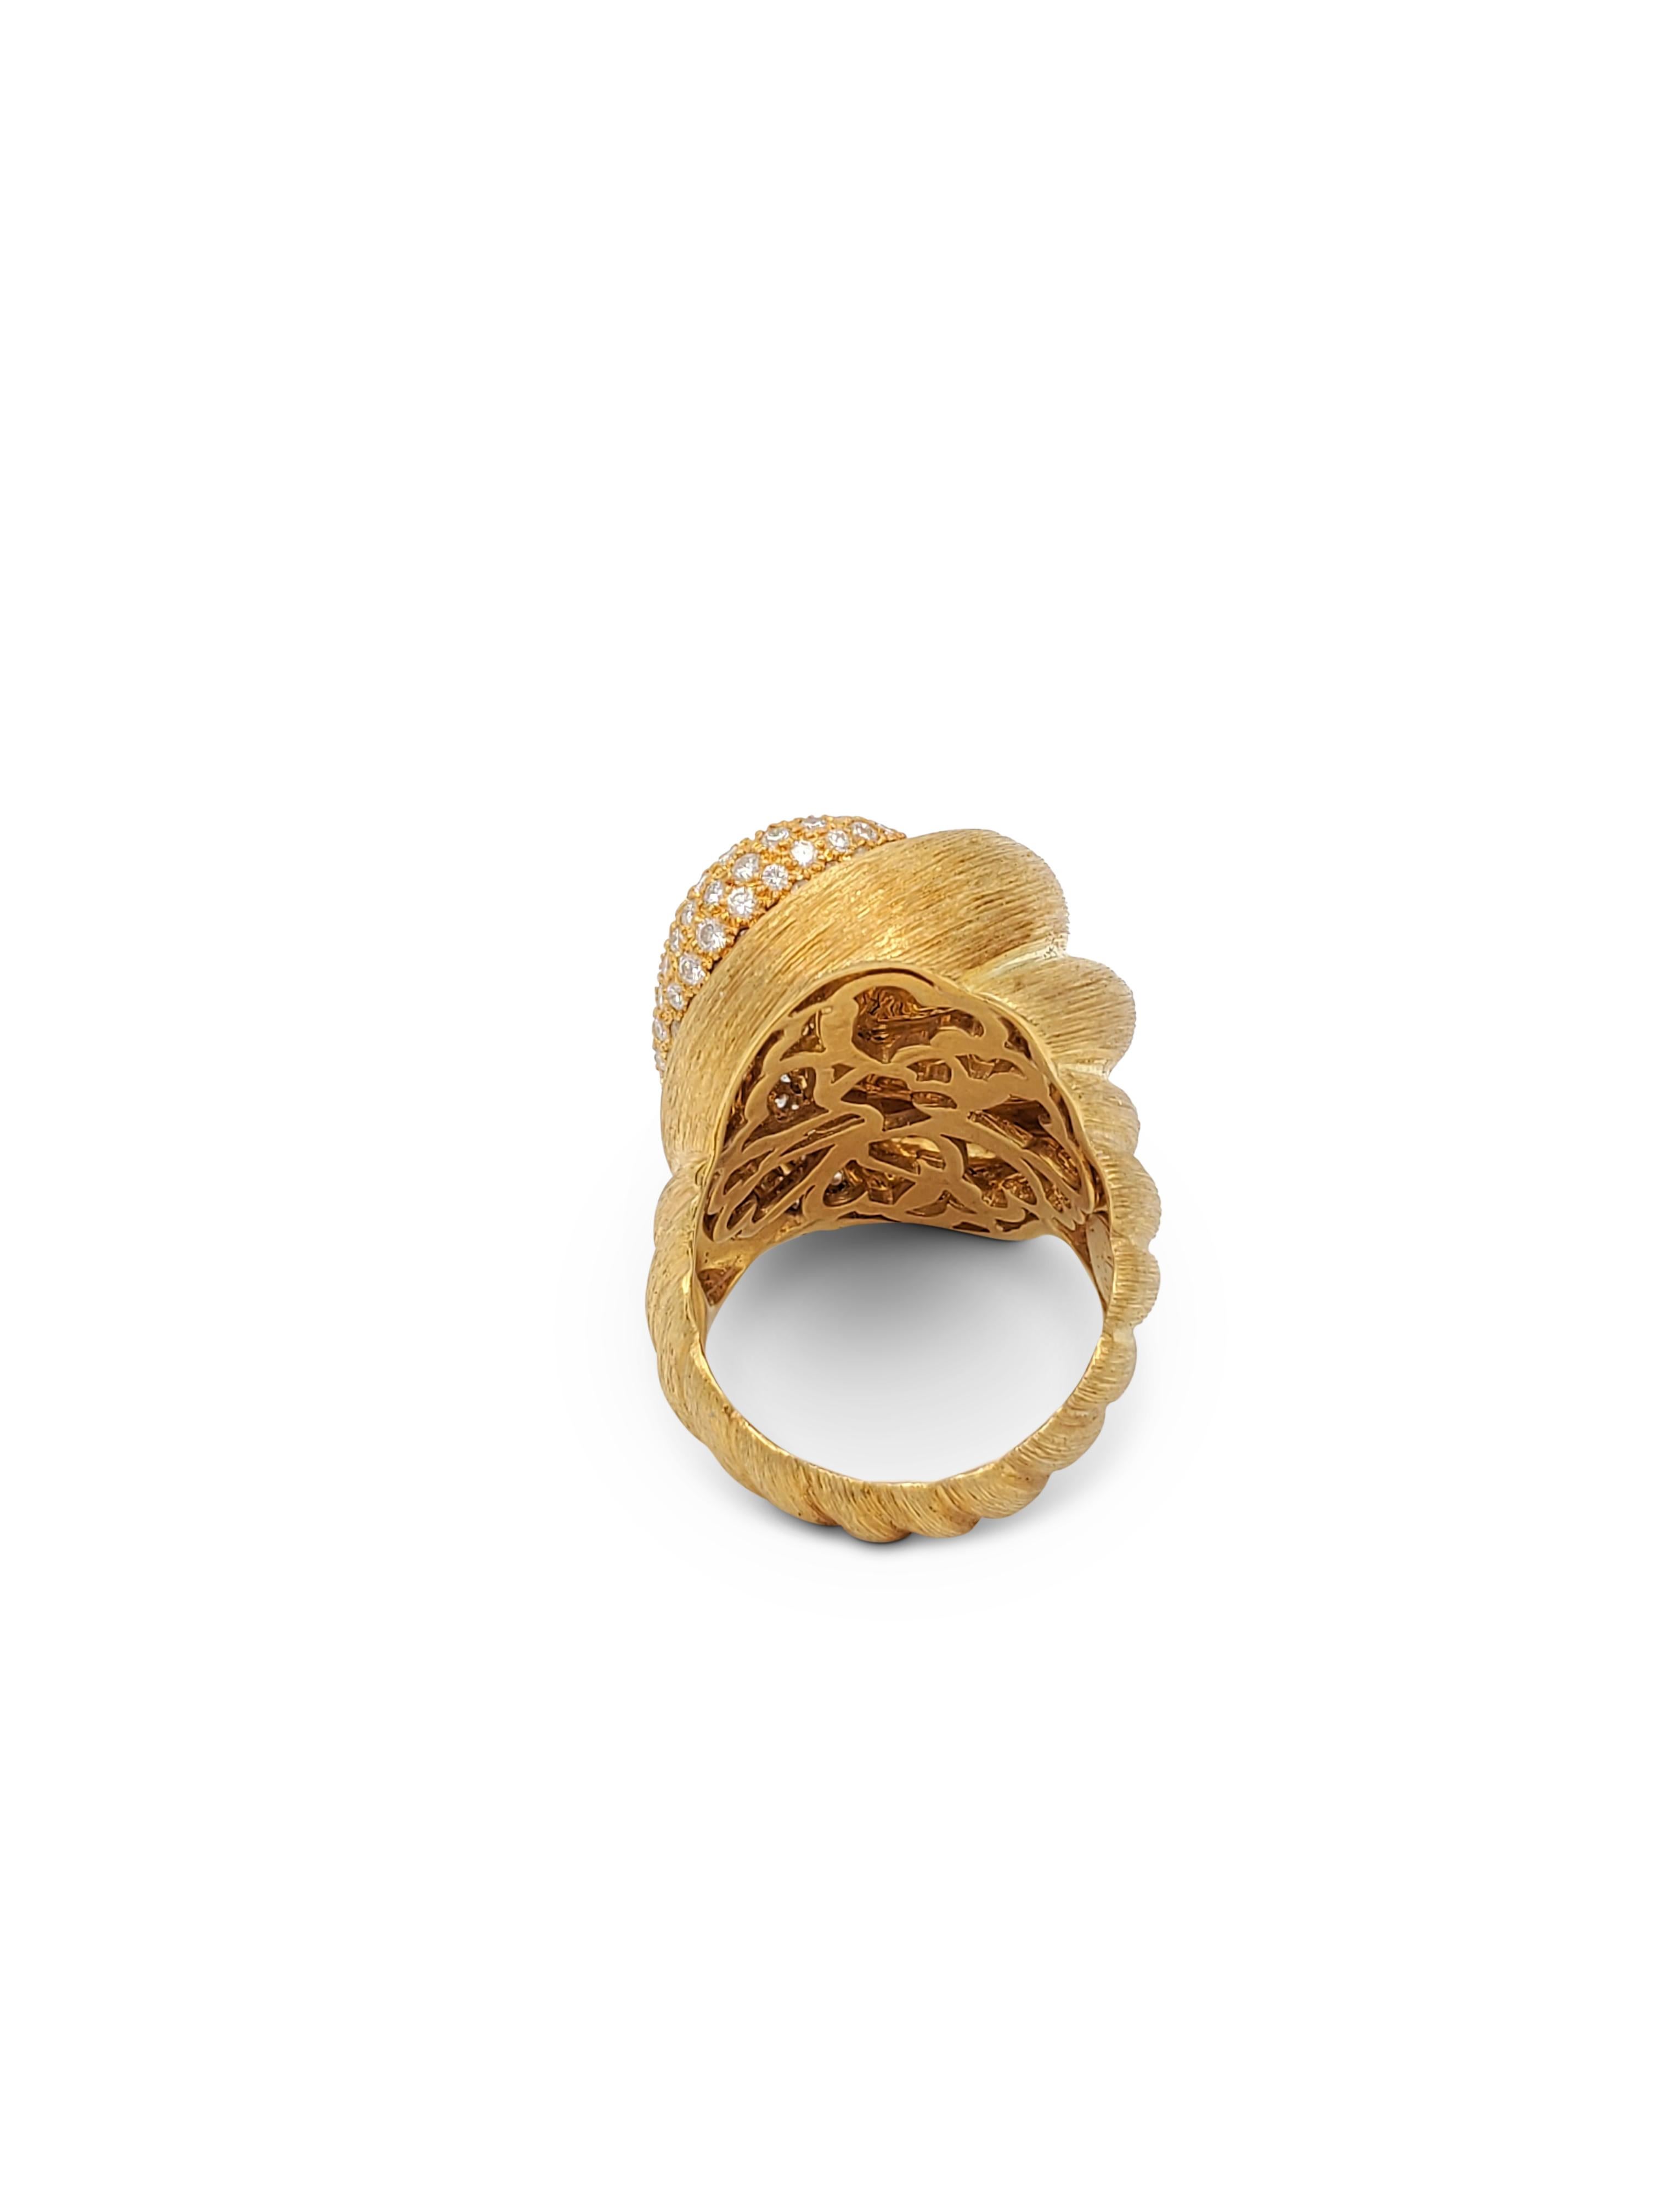 Women's Henry Dunay 'Sabi' Gold and Diamond Pave Ring